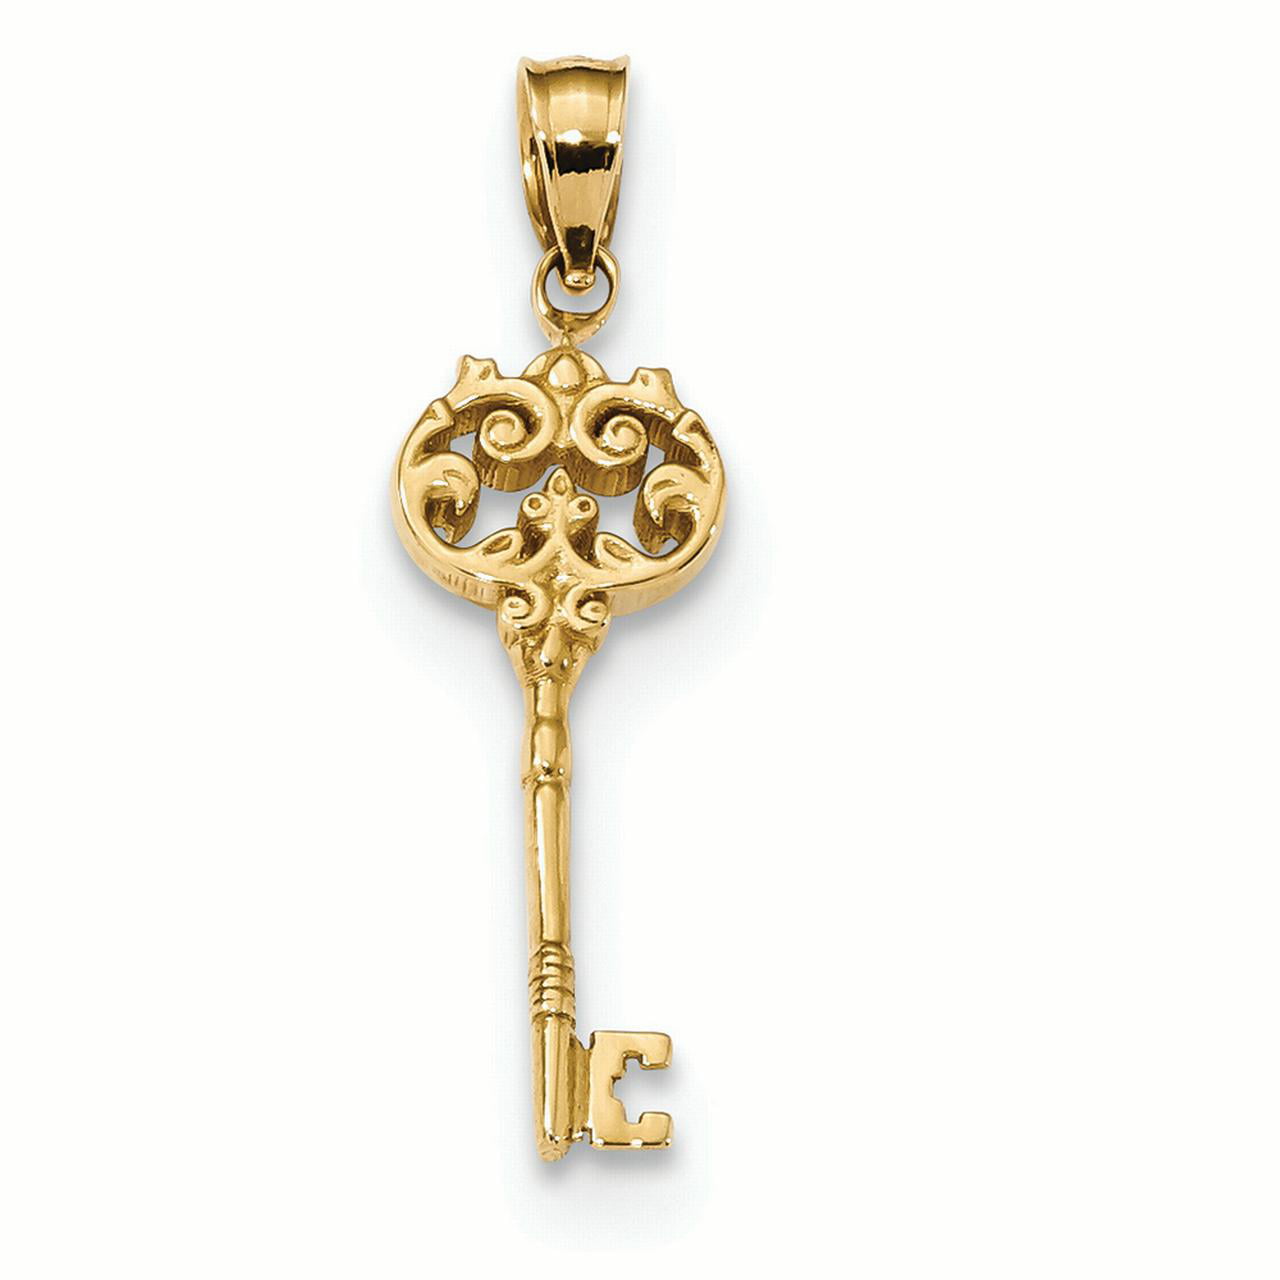 Details about   14K Two-Tone Gold Fancy Flower Charm Pendant MSRP $494